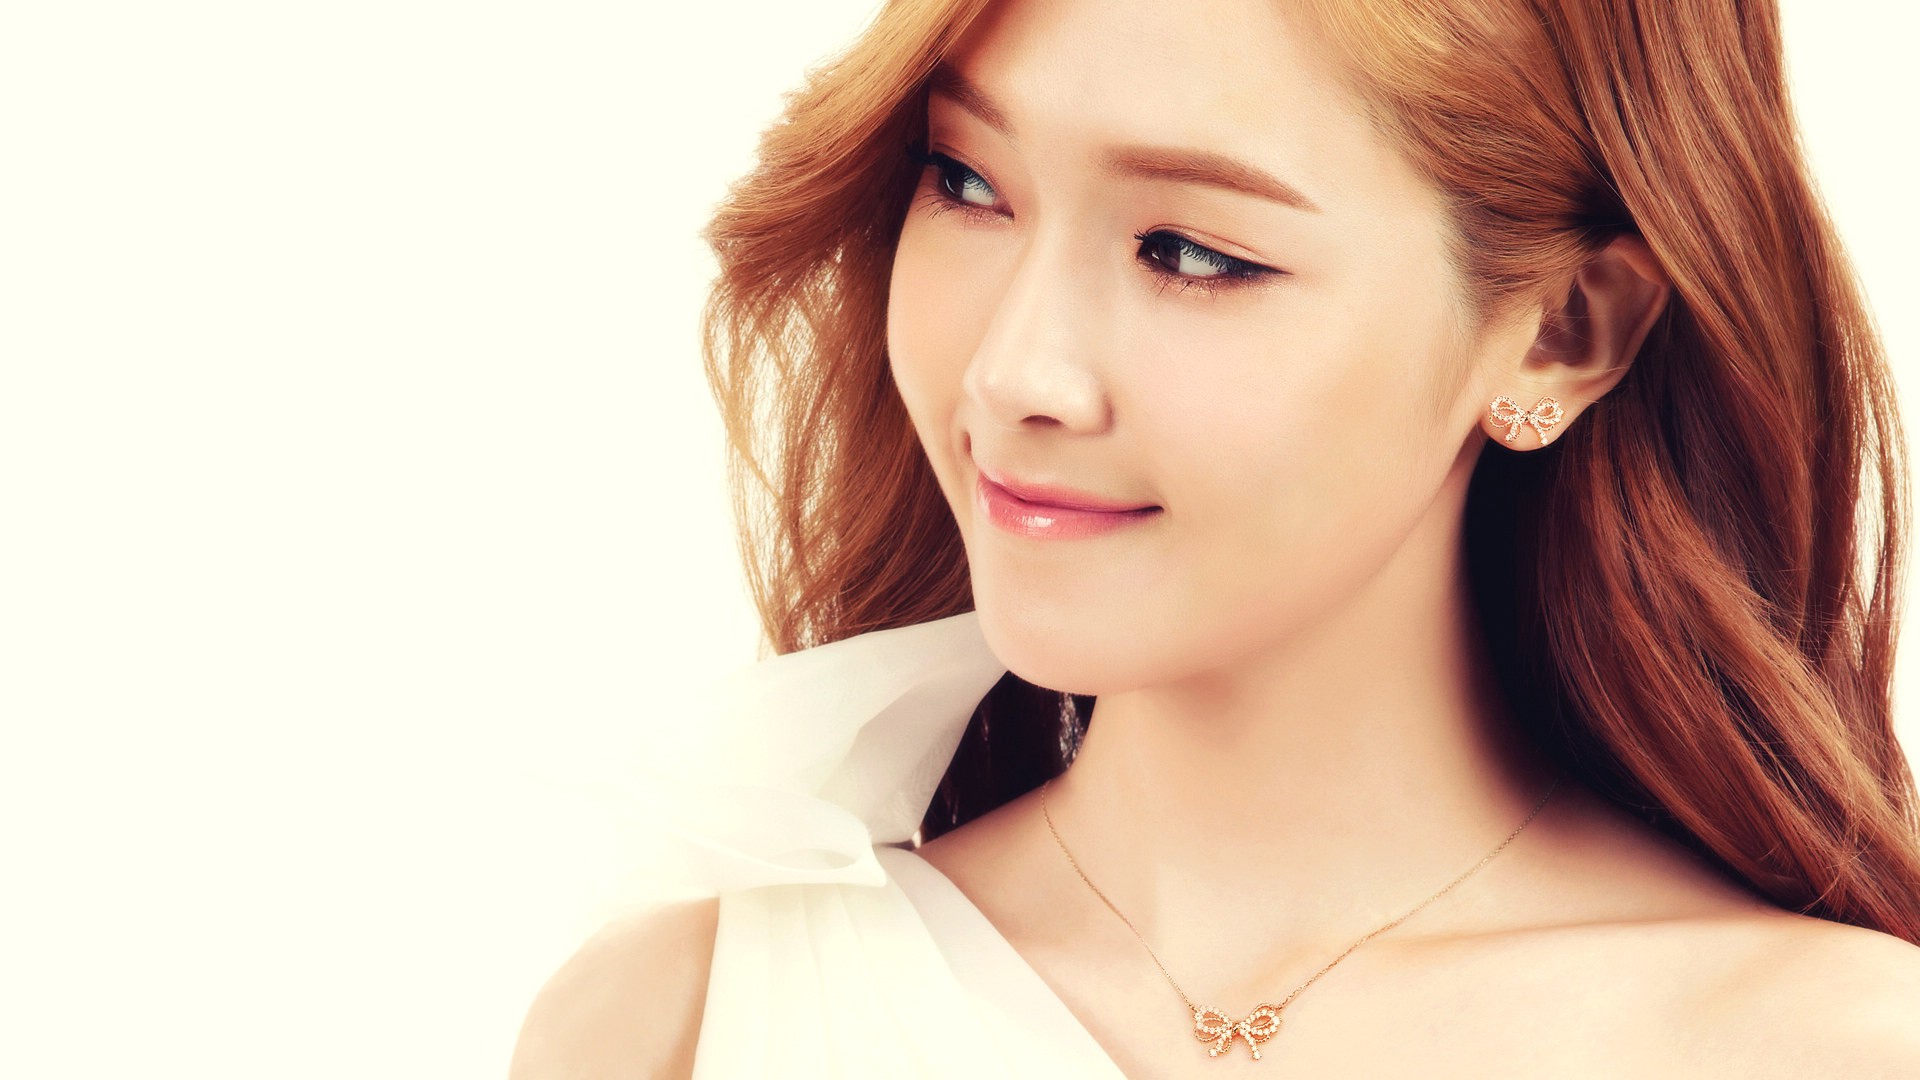 Asian Jessica Jung Girls Generation Airbrushed Wallpaper